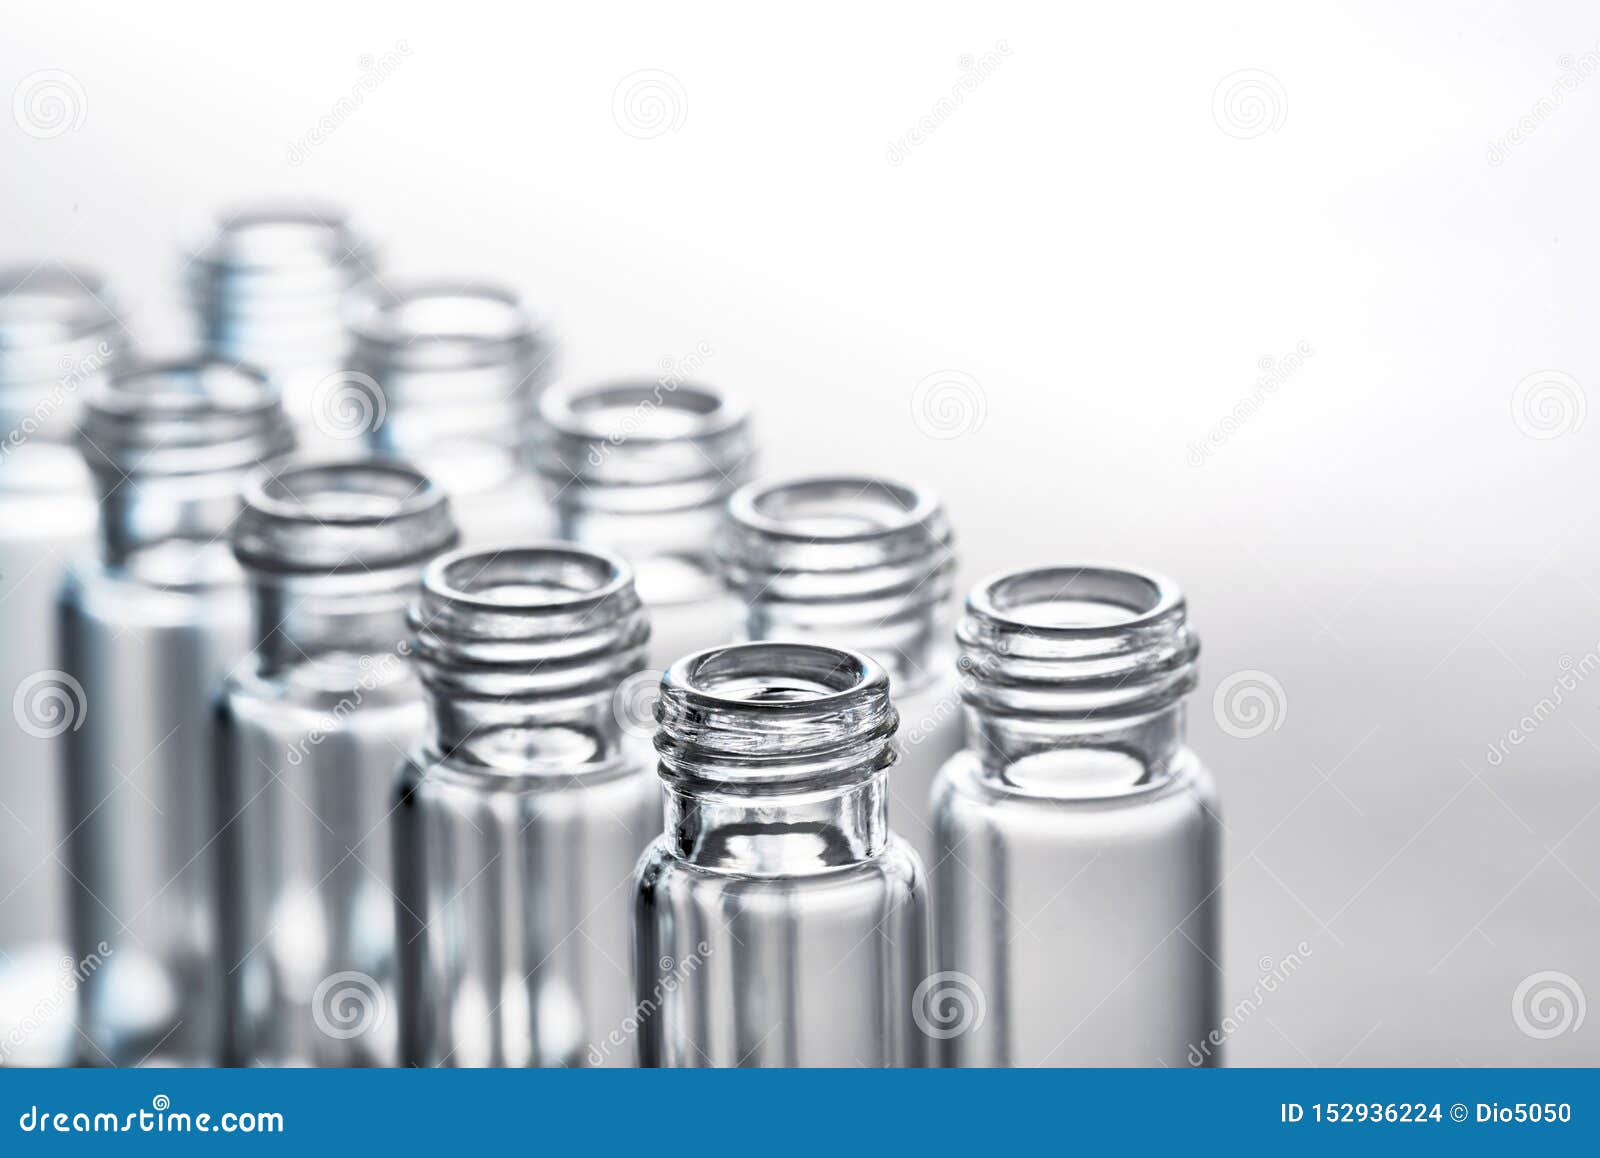 vials for biological sample on white background.